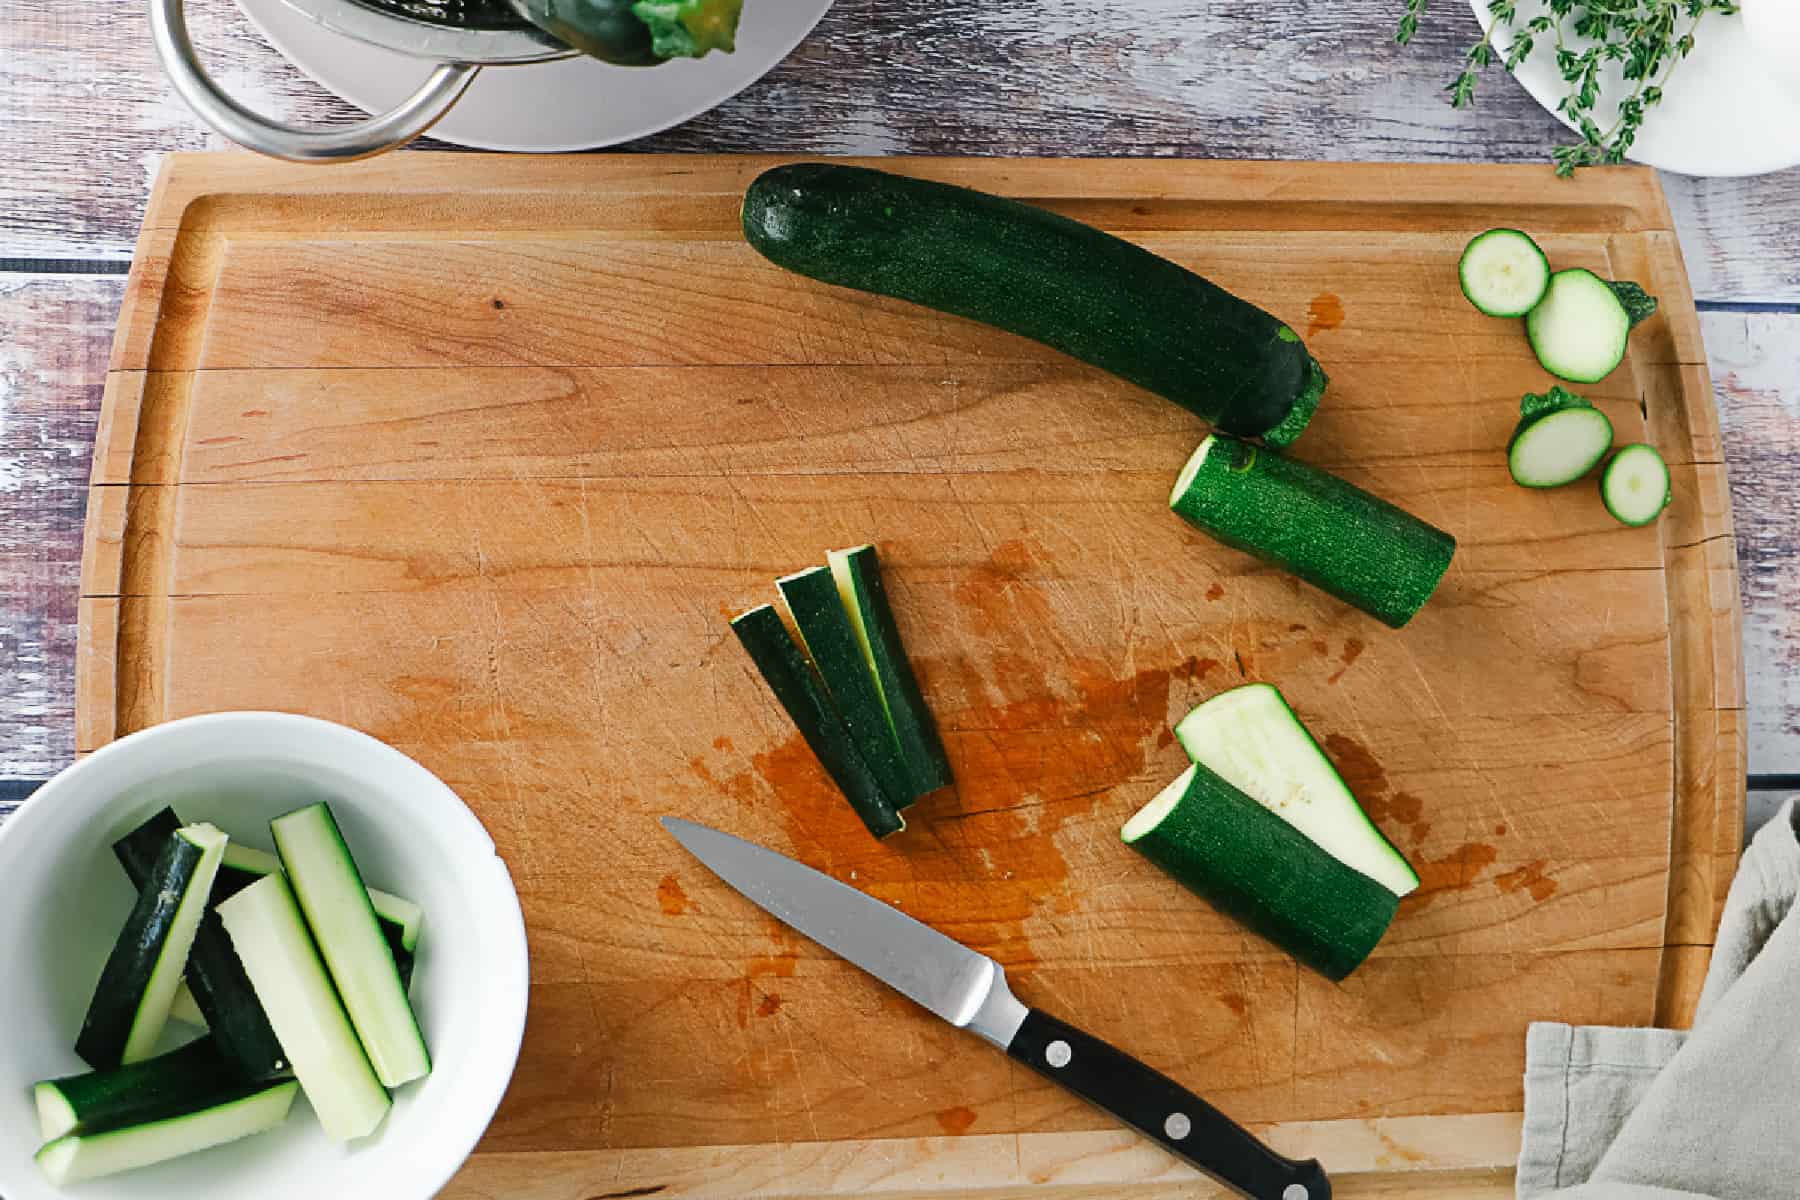 Cutting zucchini on a board